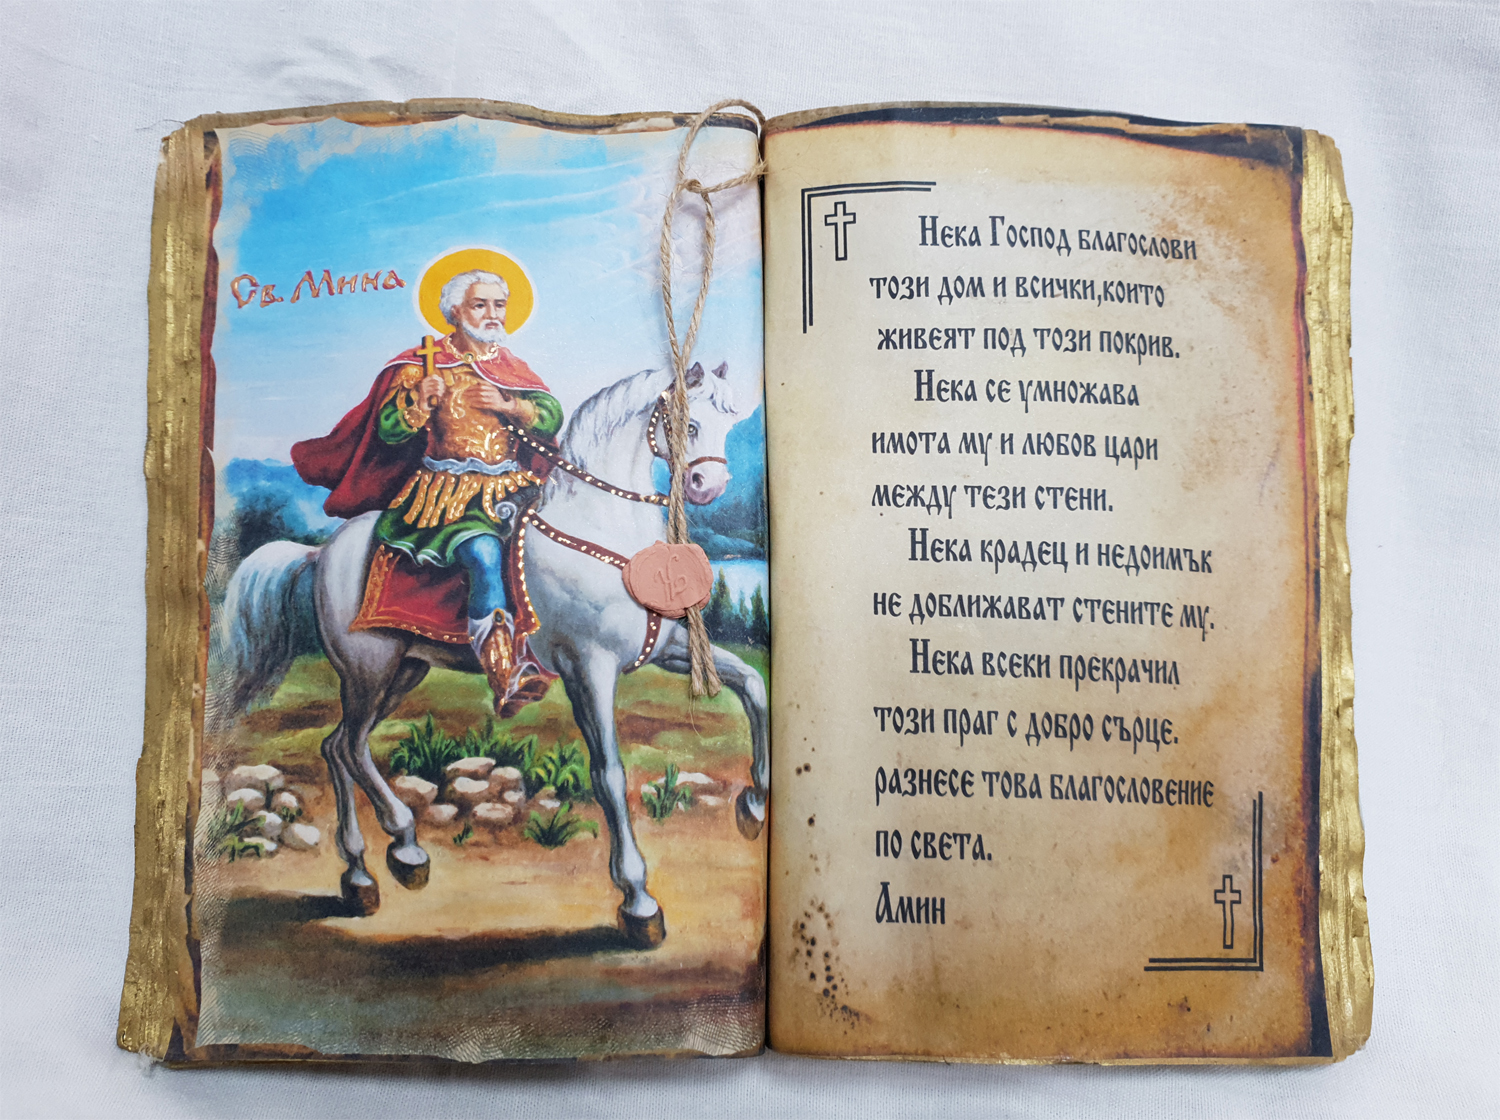 Handmade icon - book St. Mina